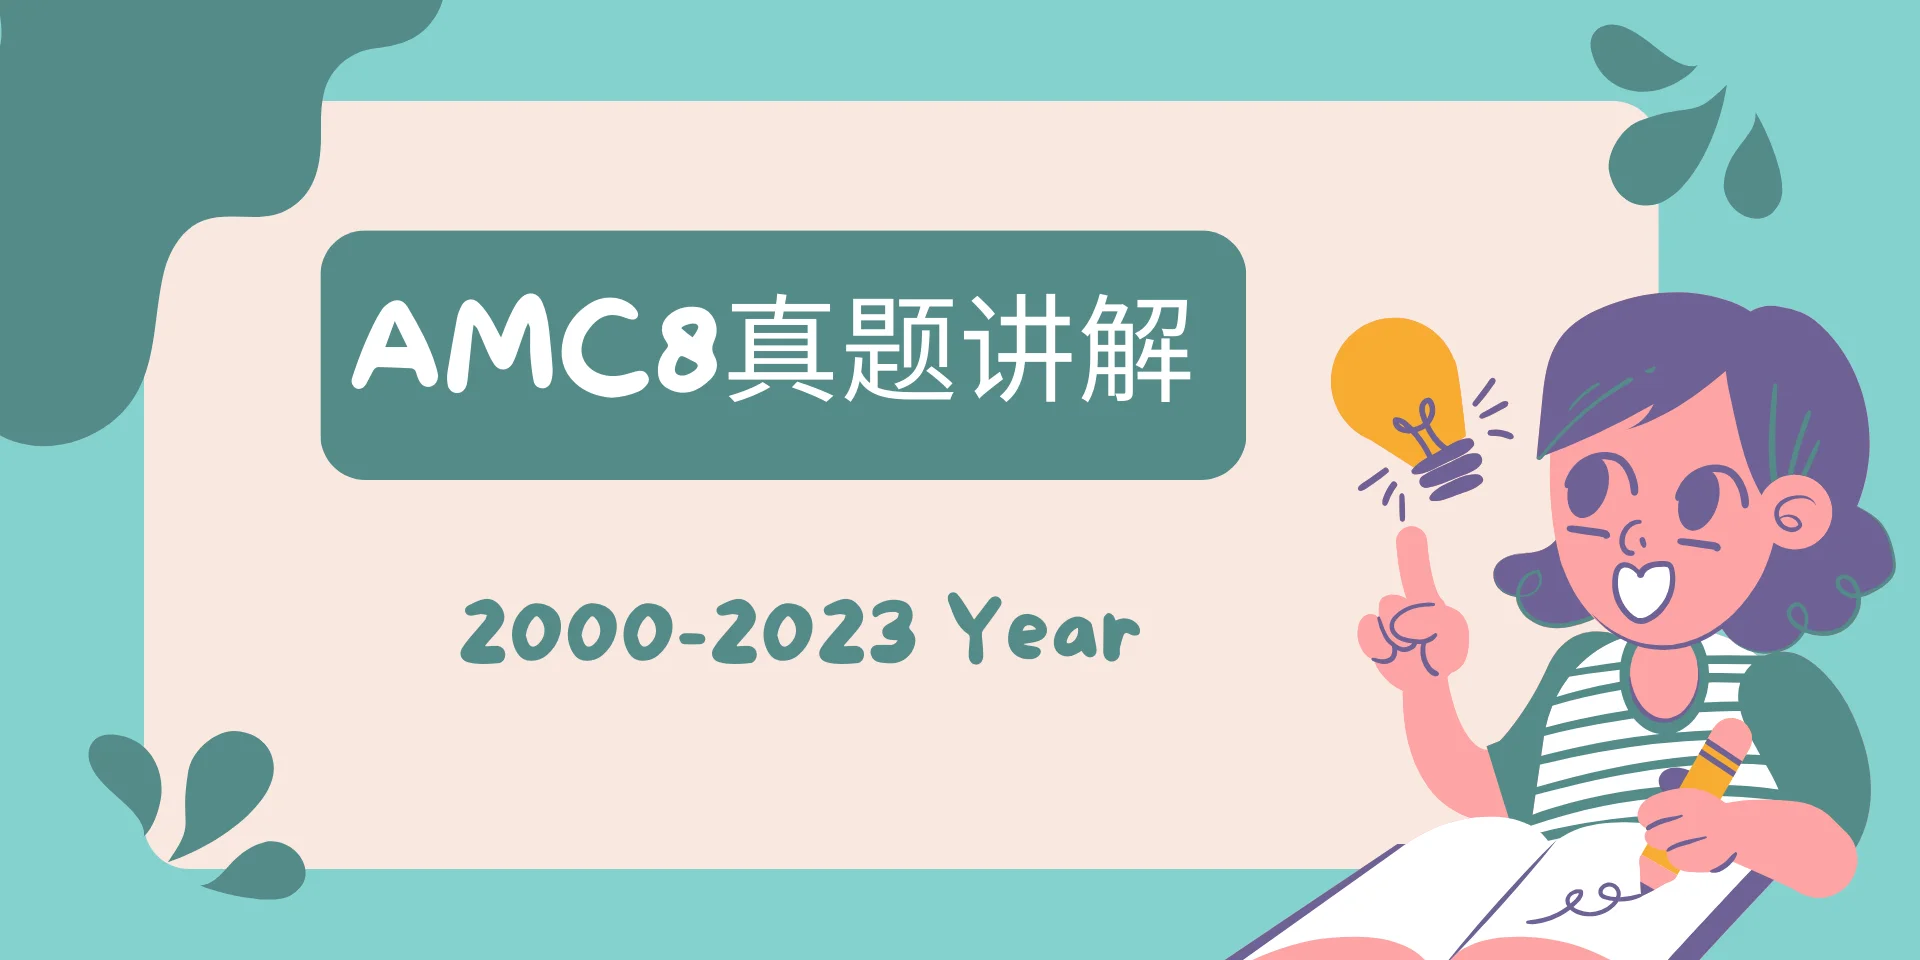 AMC8真题解析 AMC8 2000-2023年真题解析 explanation